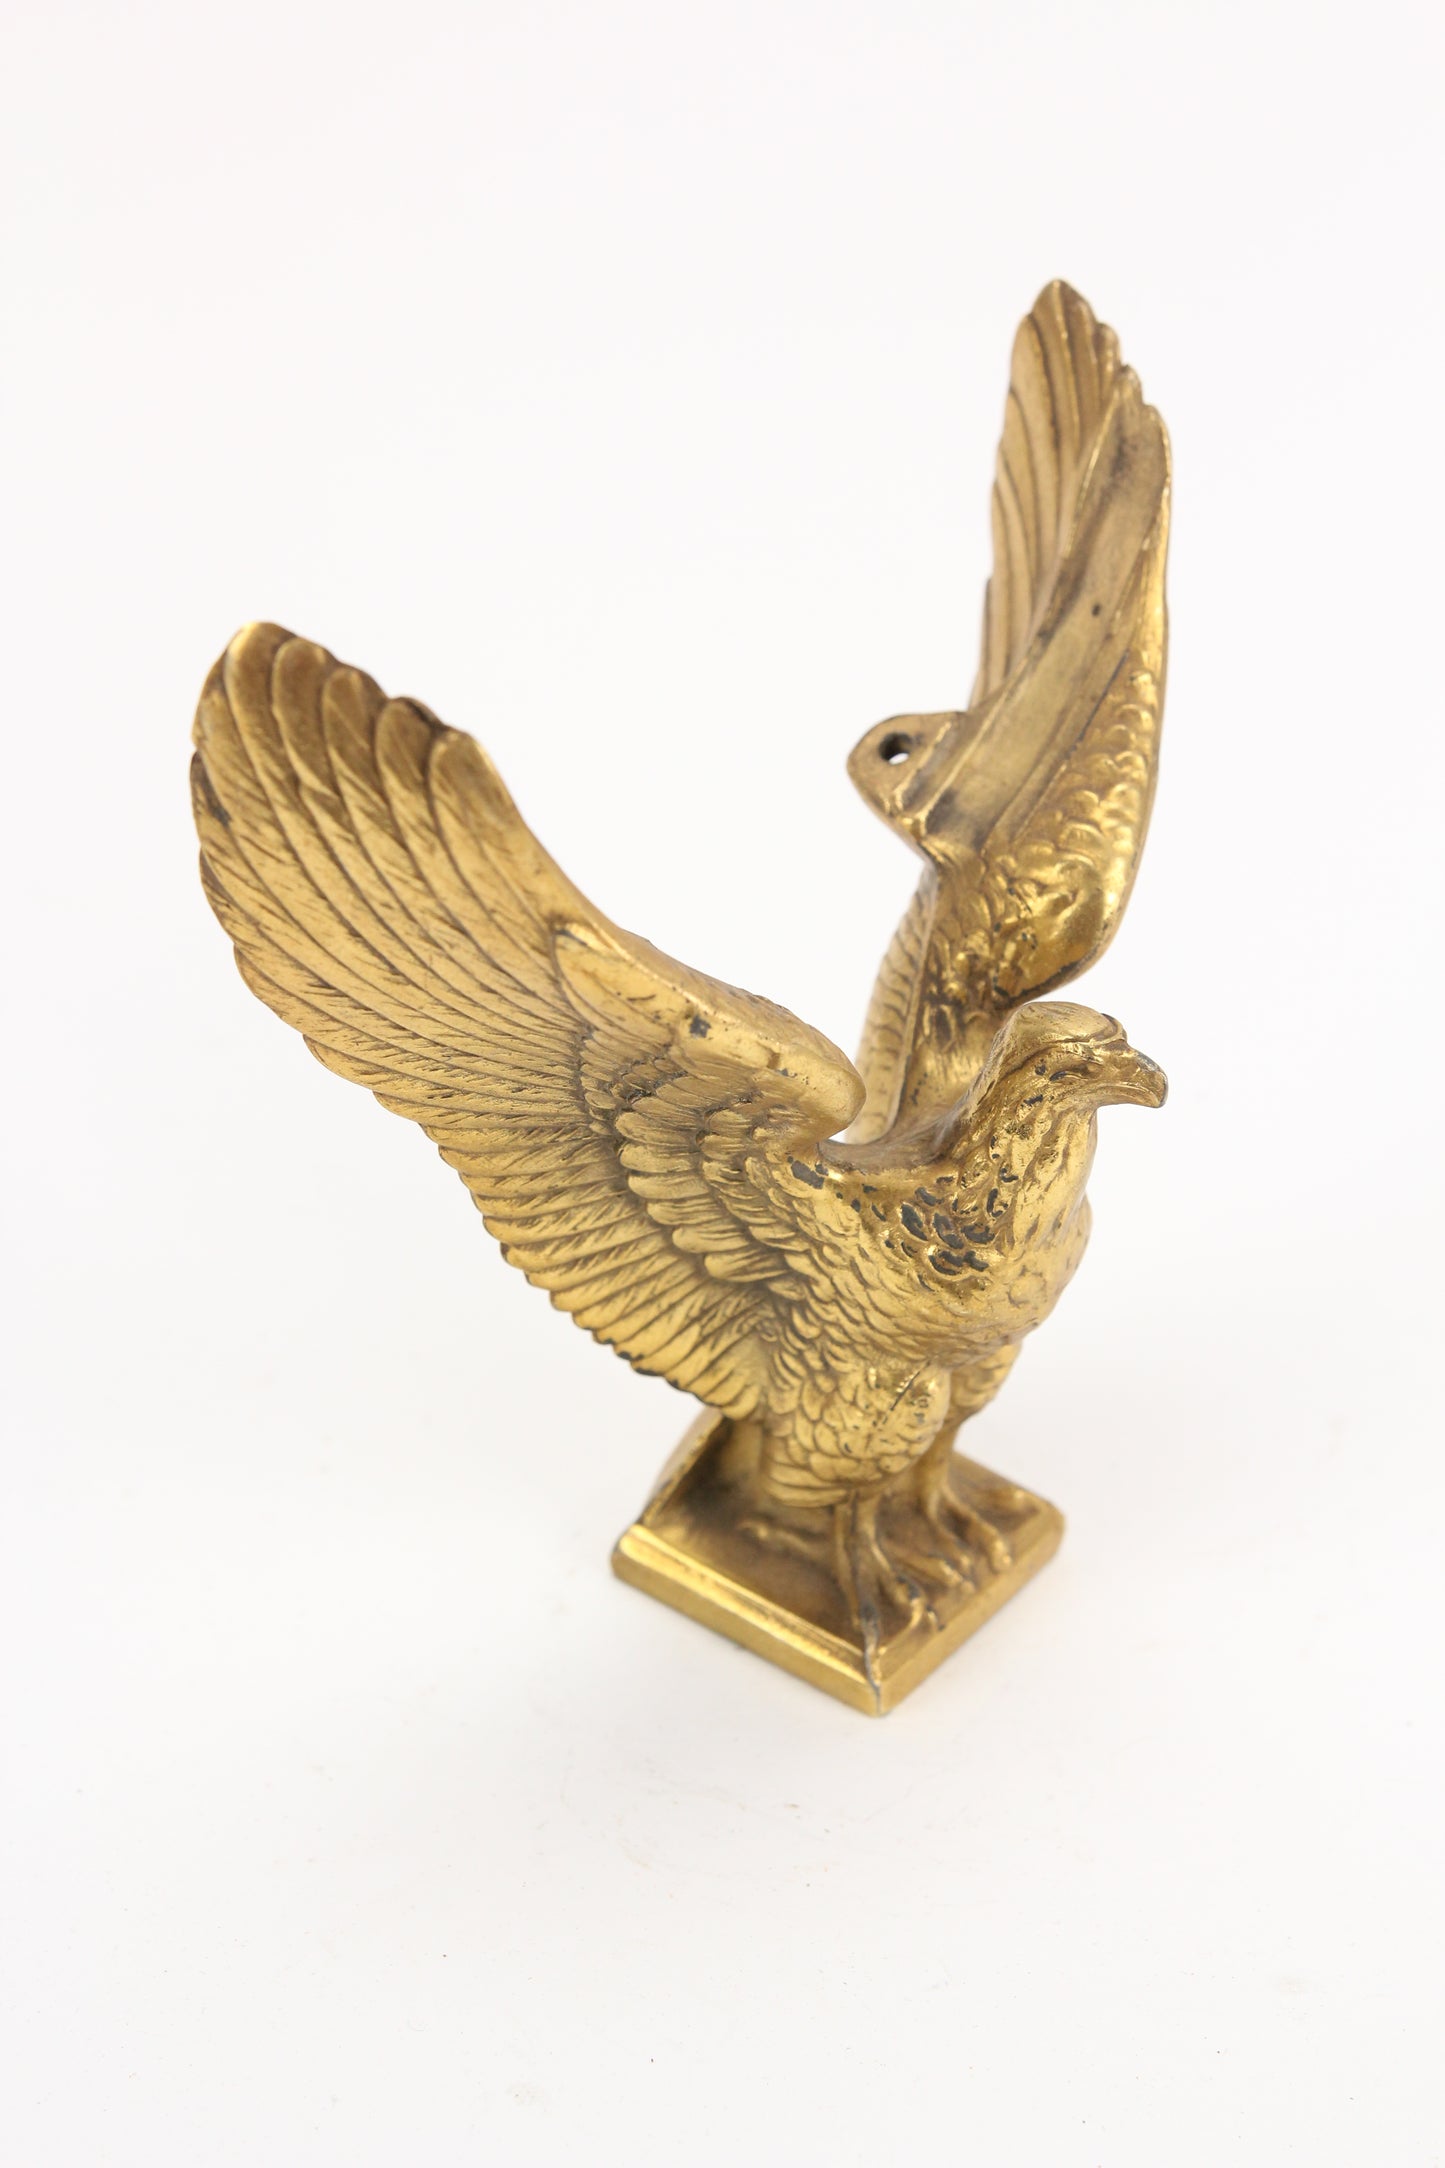 Gilded Pot Metal American Eagle Trophy Ornament